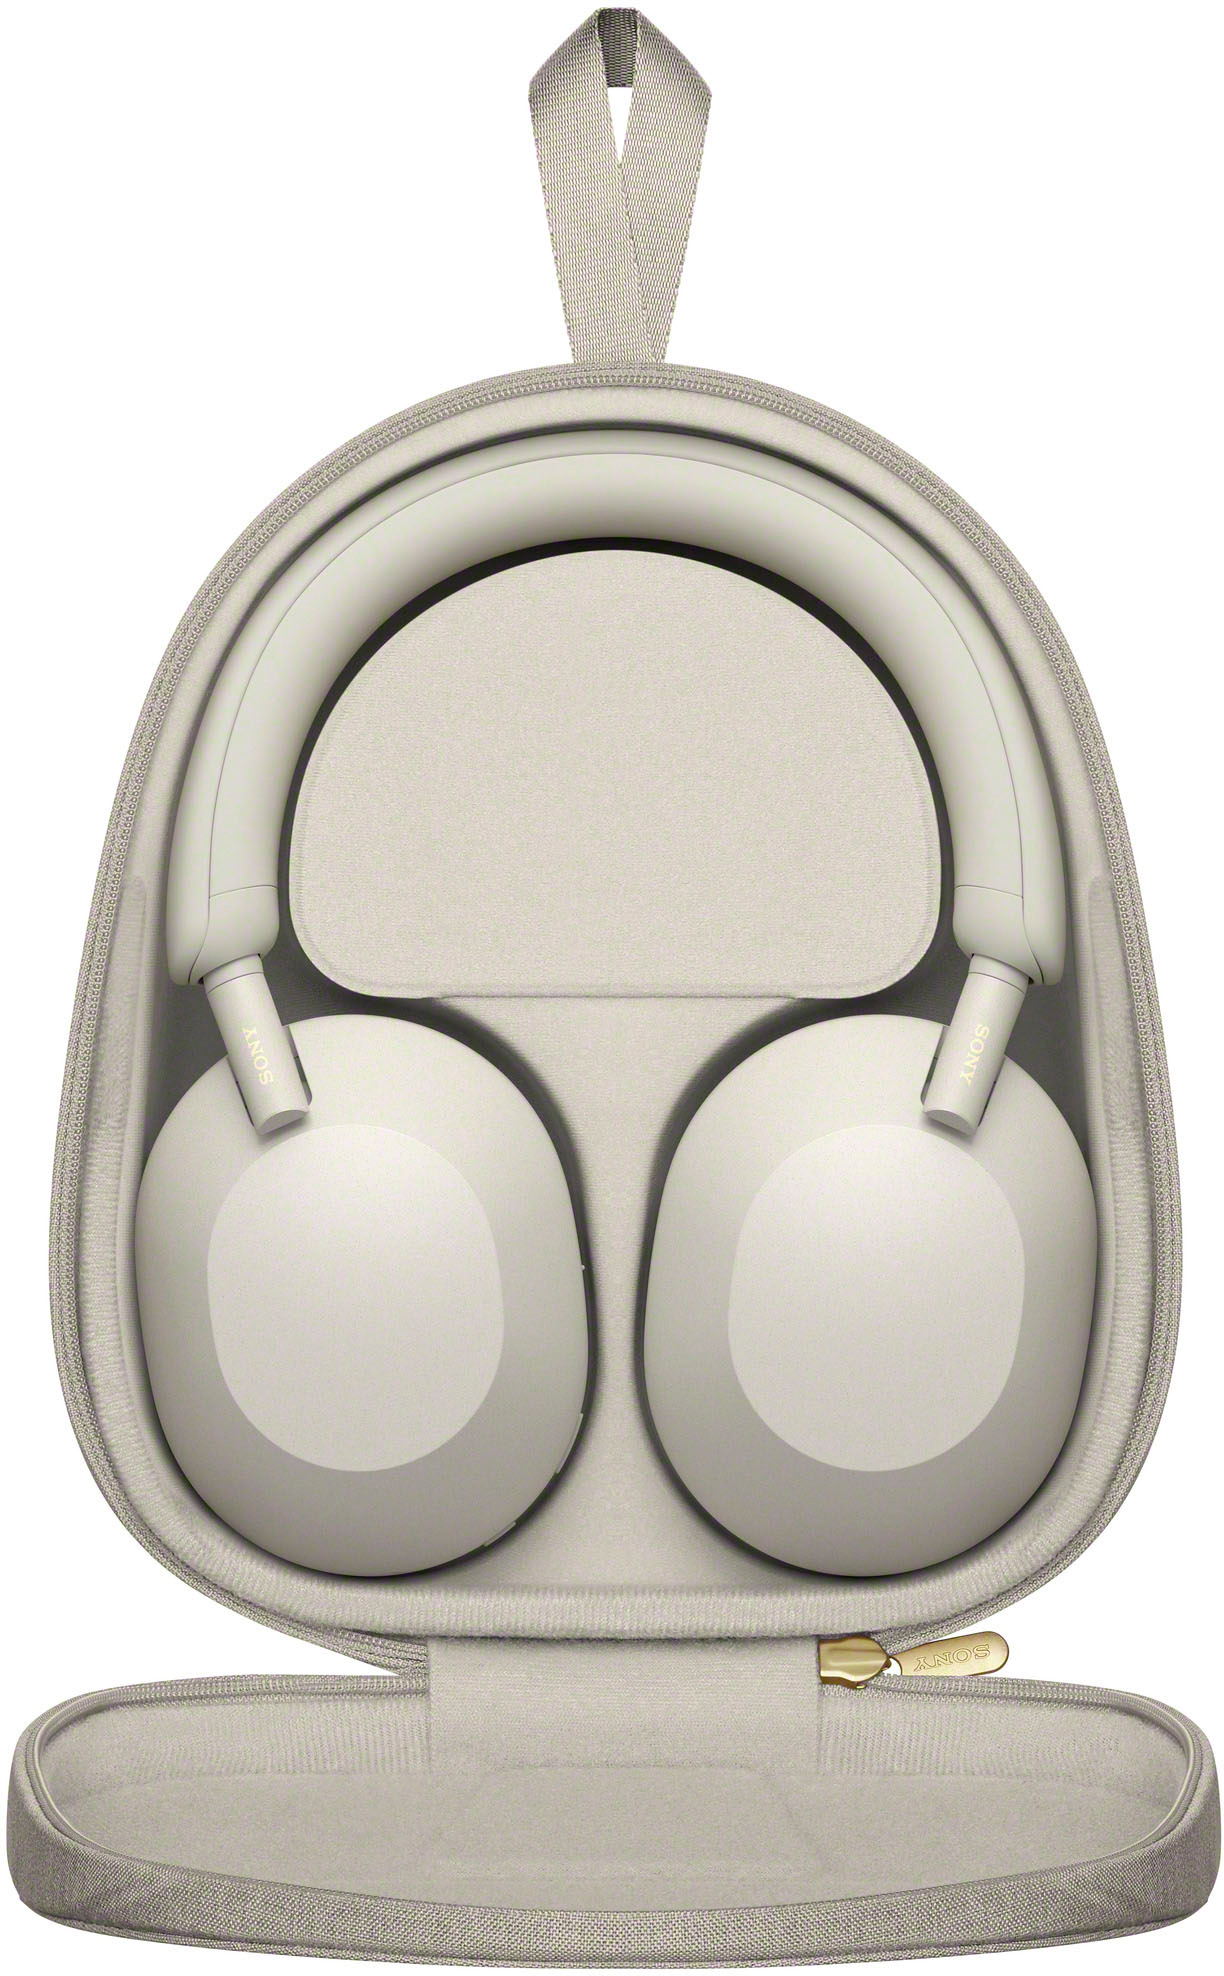 Sony WHXM5 Wireless Noise Canceling Over the Ear Headphones Silver  WHXM5/S   Best Buy